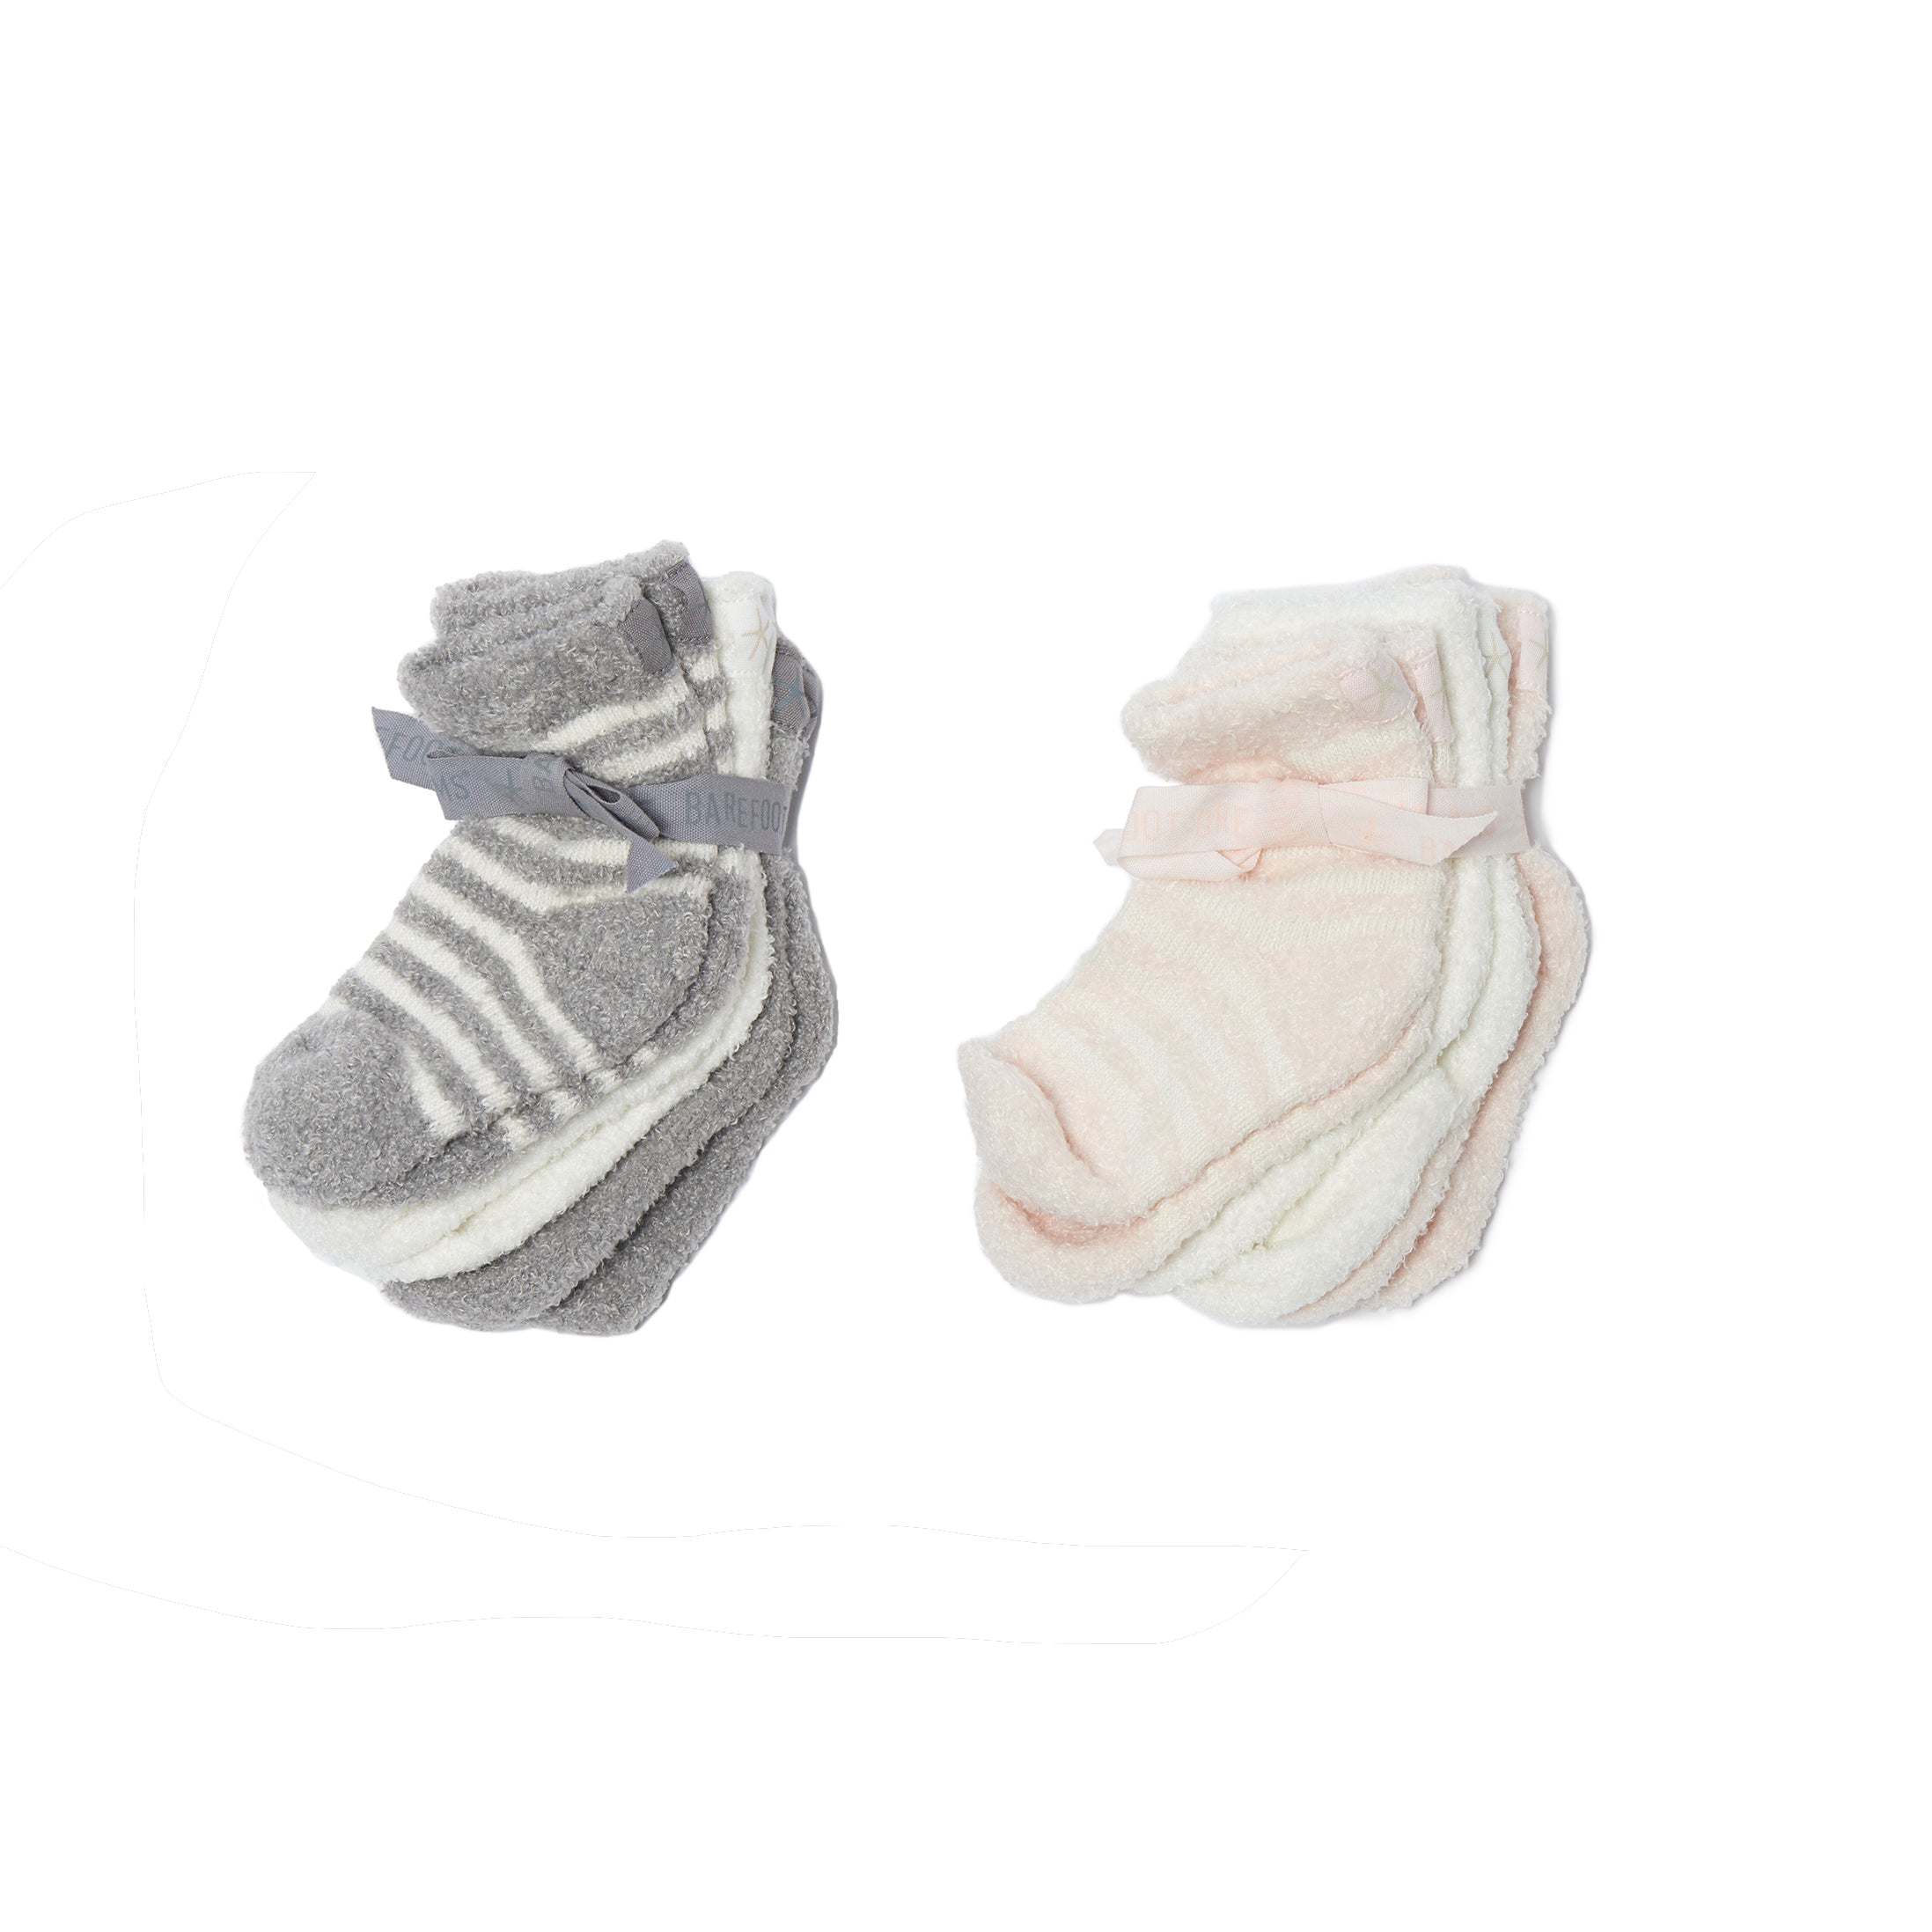 Cozychic Lite Infant Socks - Set of Three